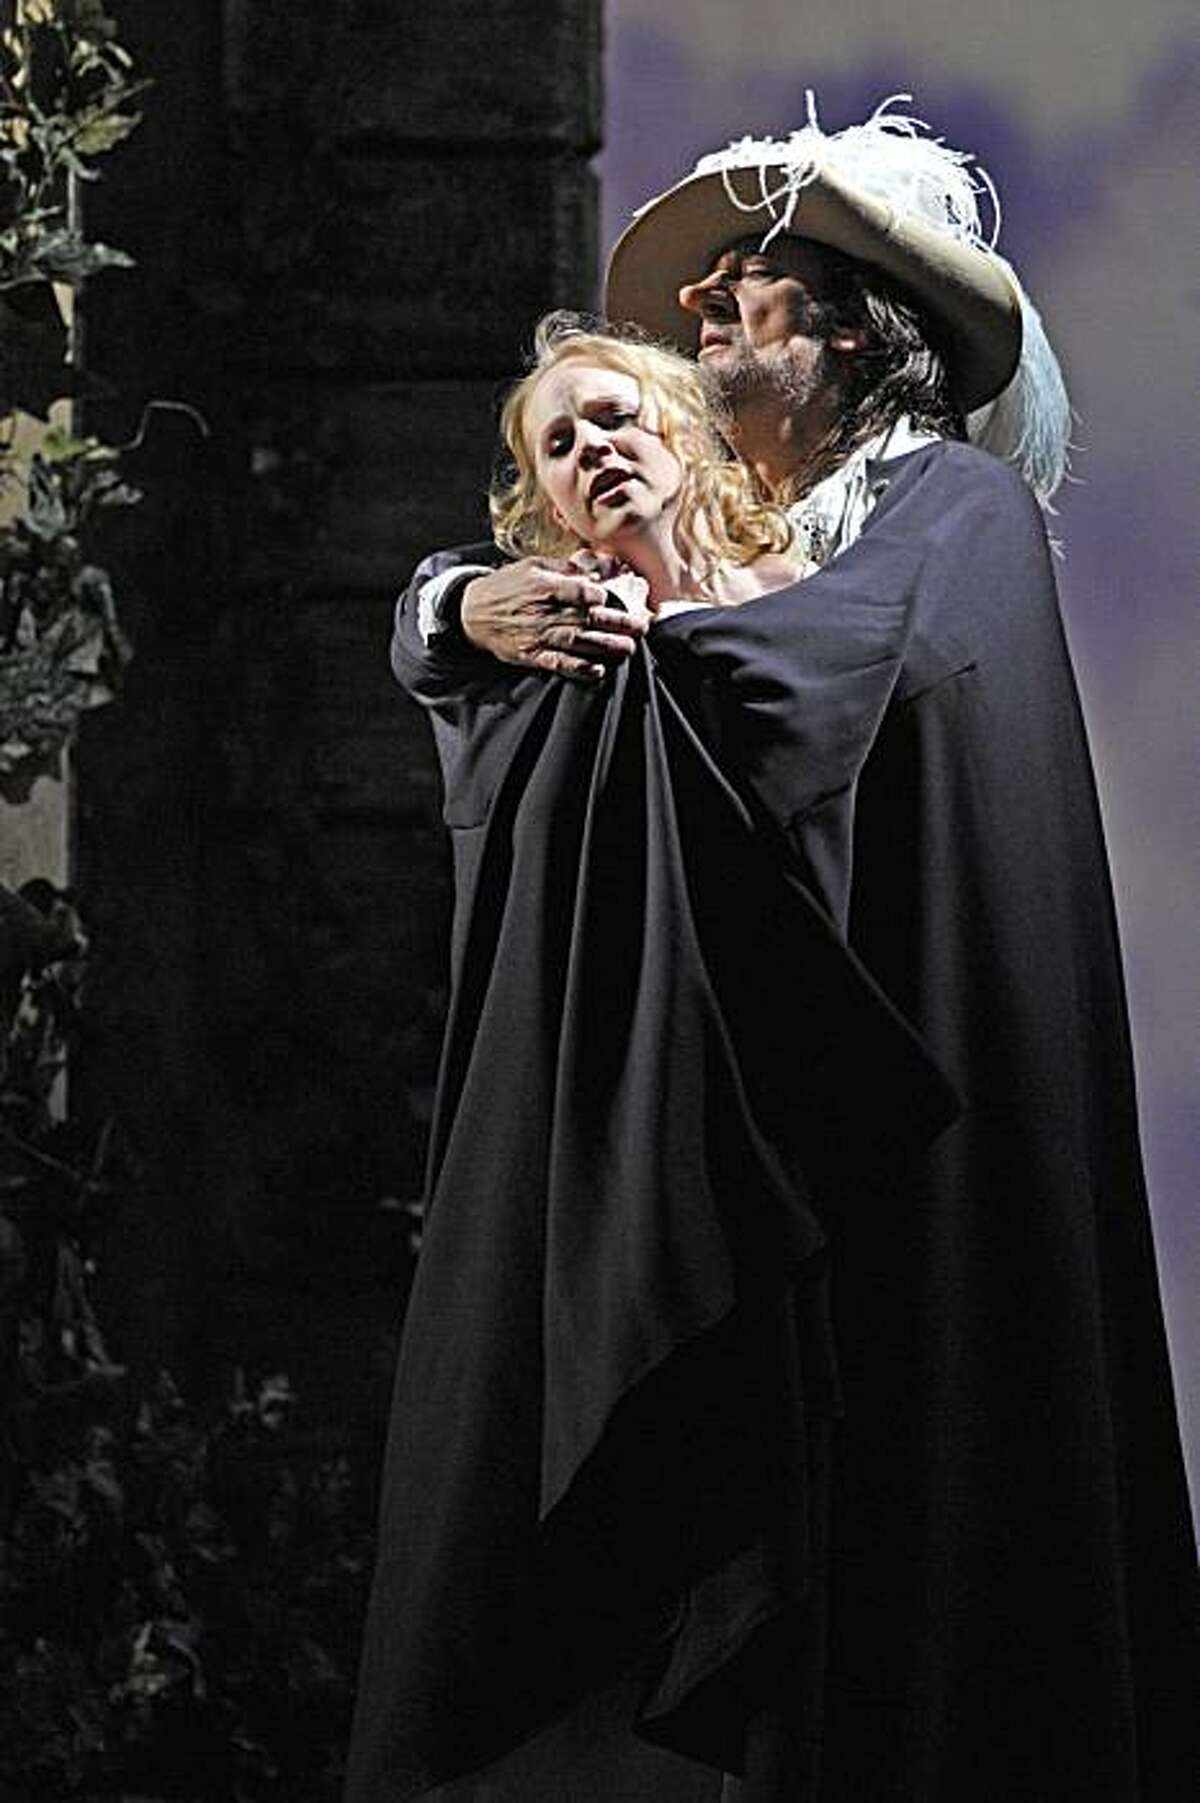 Placido Domingo in Cyrano de Bergerac photo by Marie-Noëlle Robert/Théâtre du Châtelet